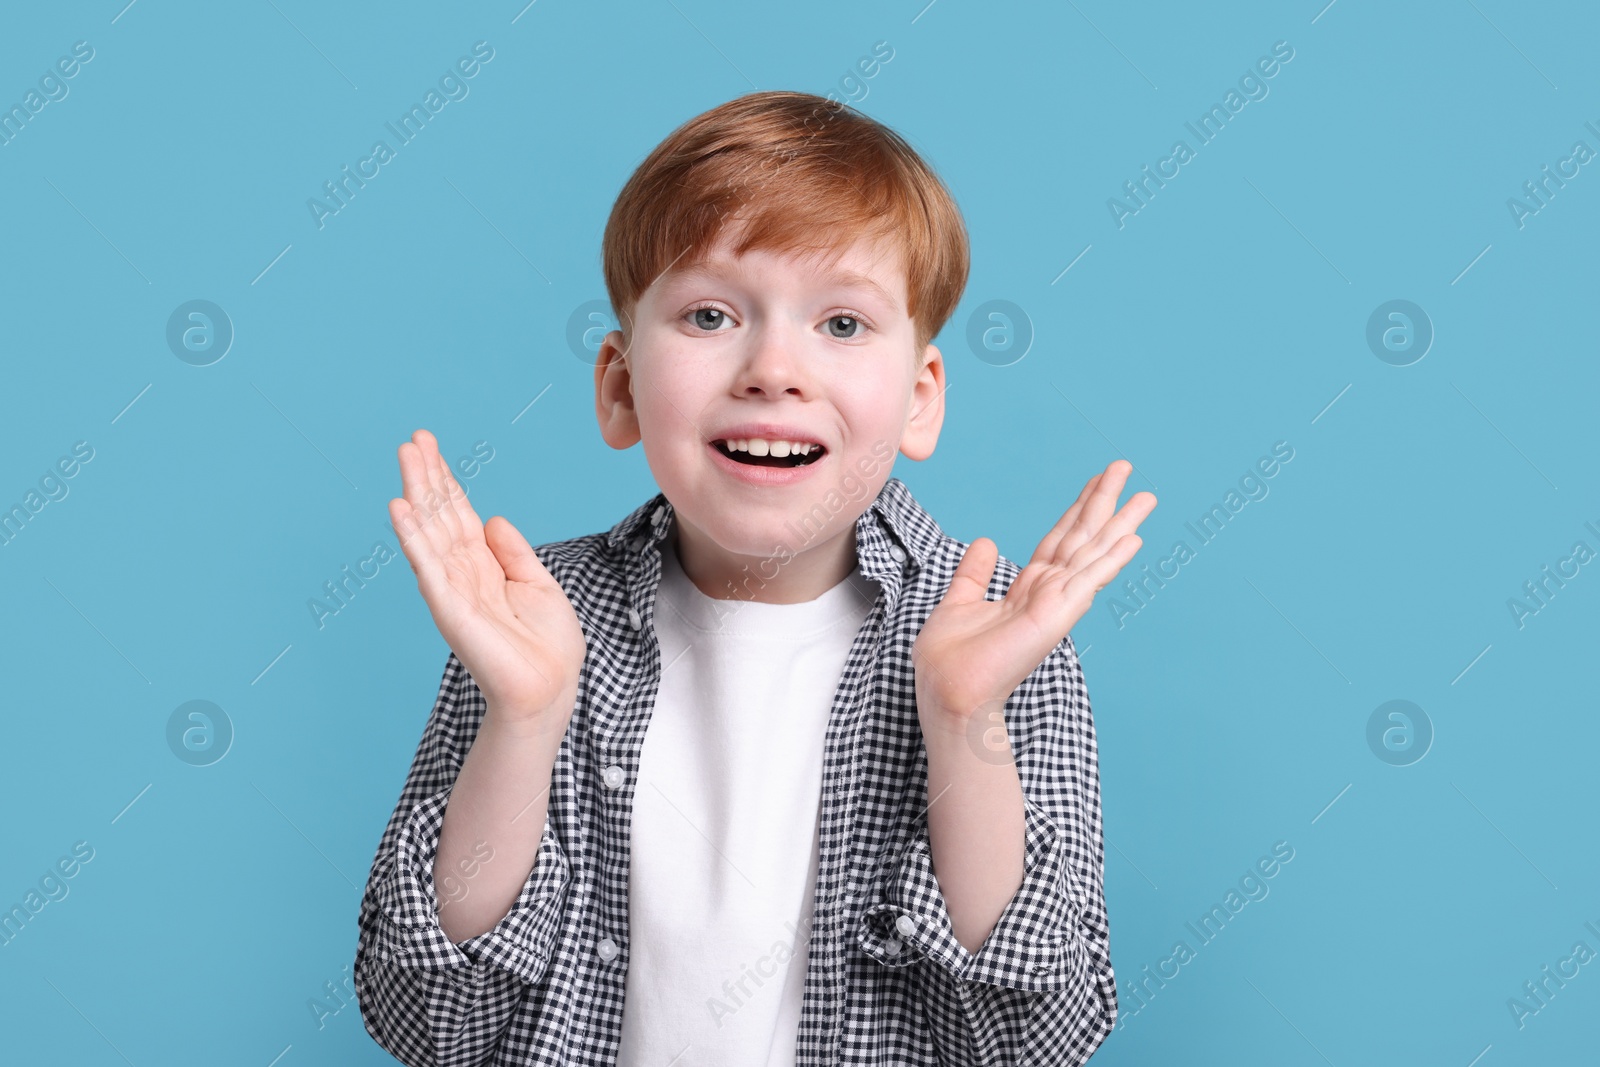 Photo of Surprised little boy on light blue background